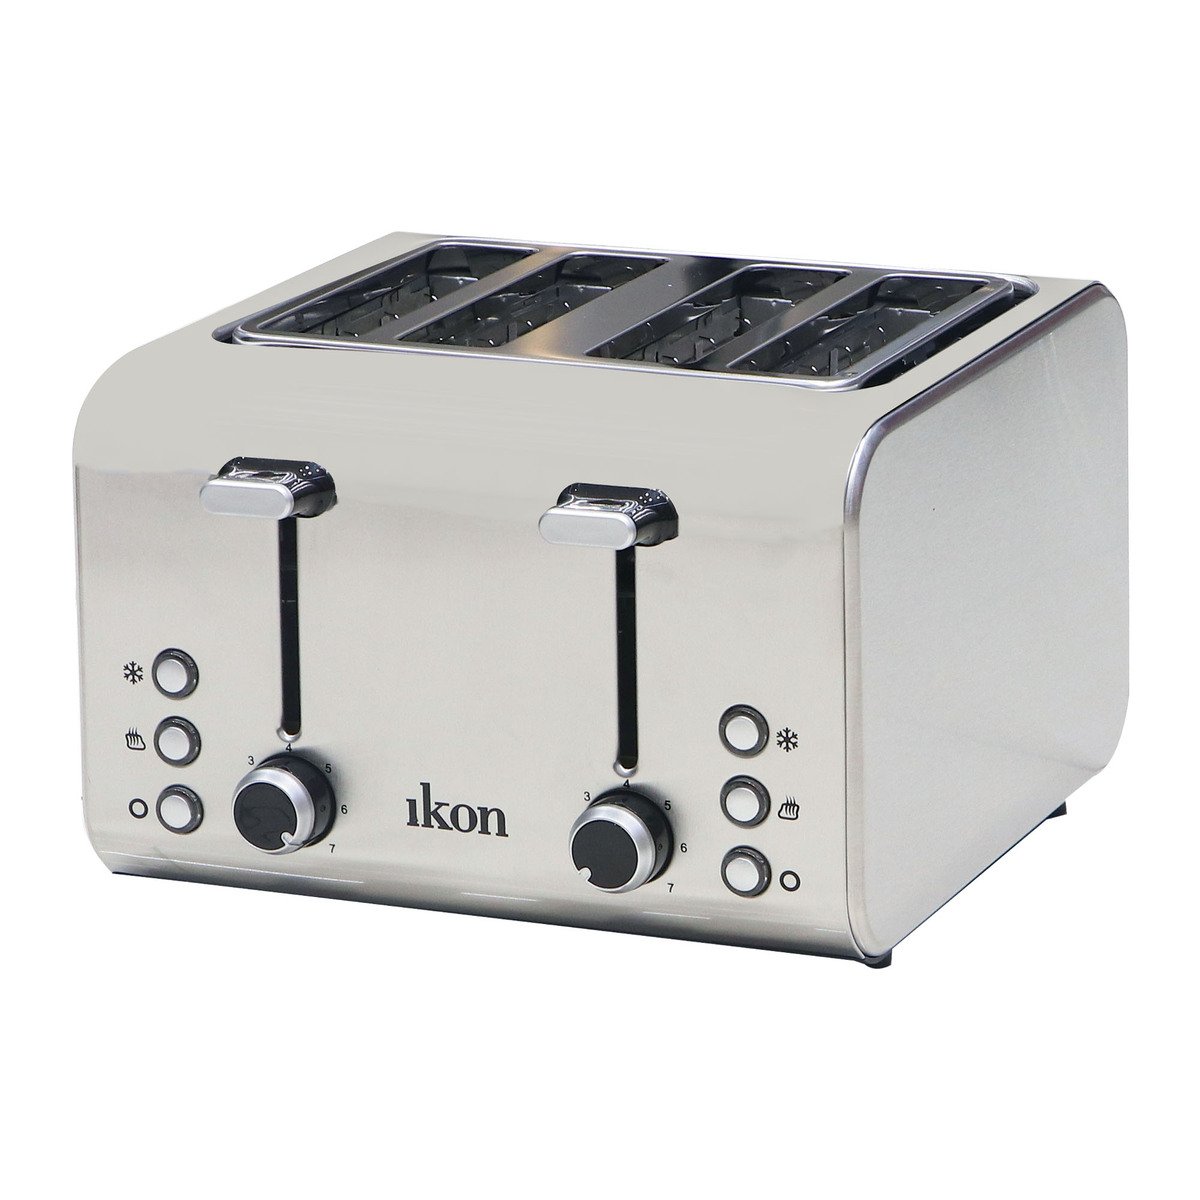 Ikon Stainless Steel Bread Toaster 4Slice IK8590A